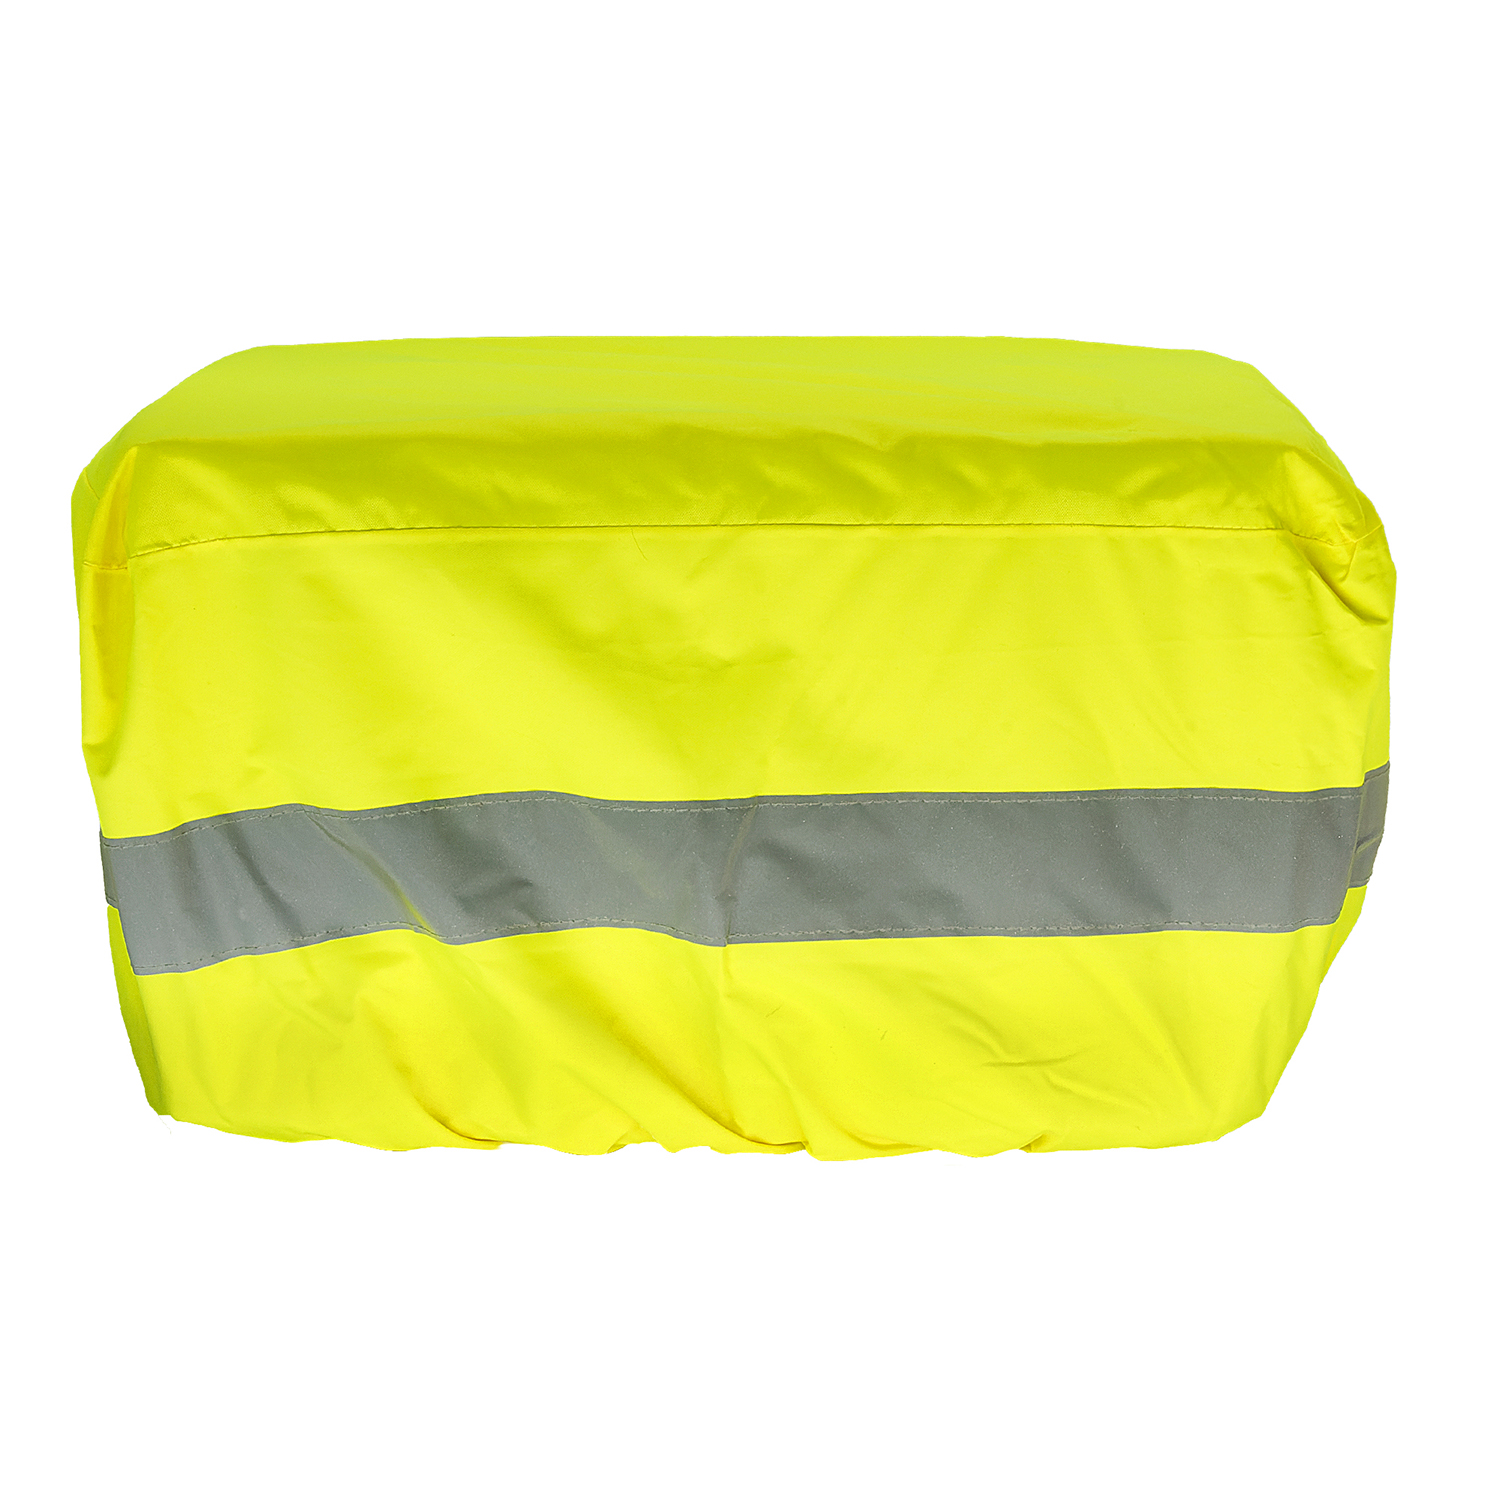 4-Act Regenschutz Korb 40 x 30cm - Fluor Gelb kaufen bei HBS